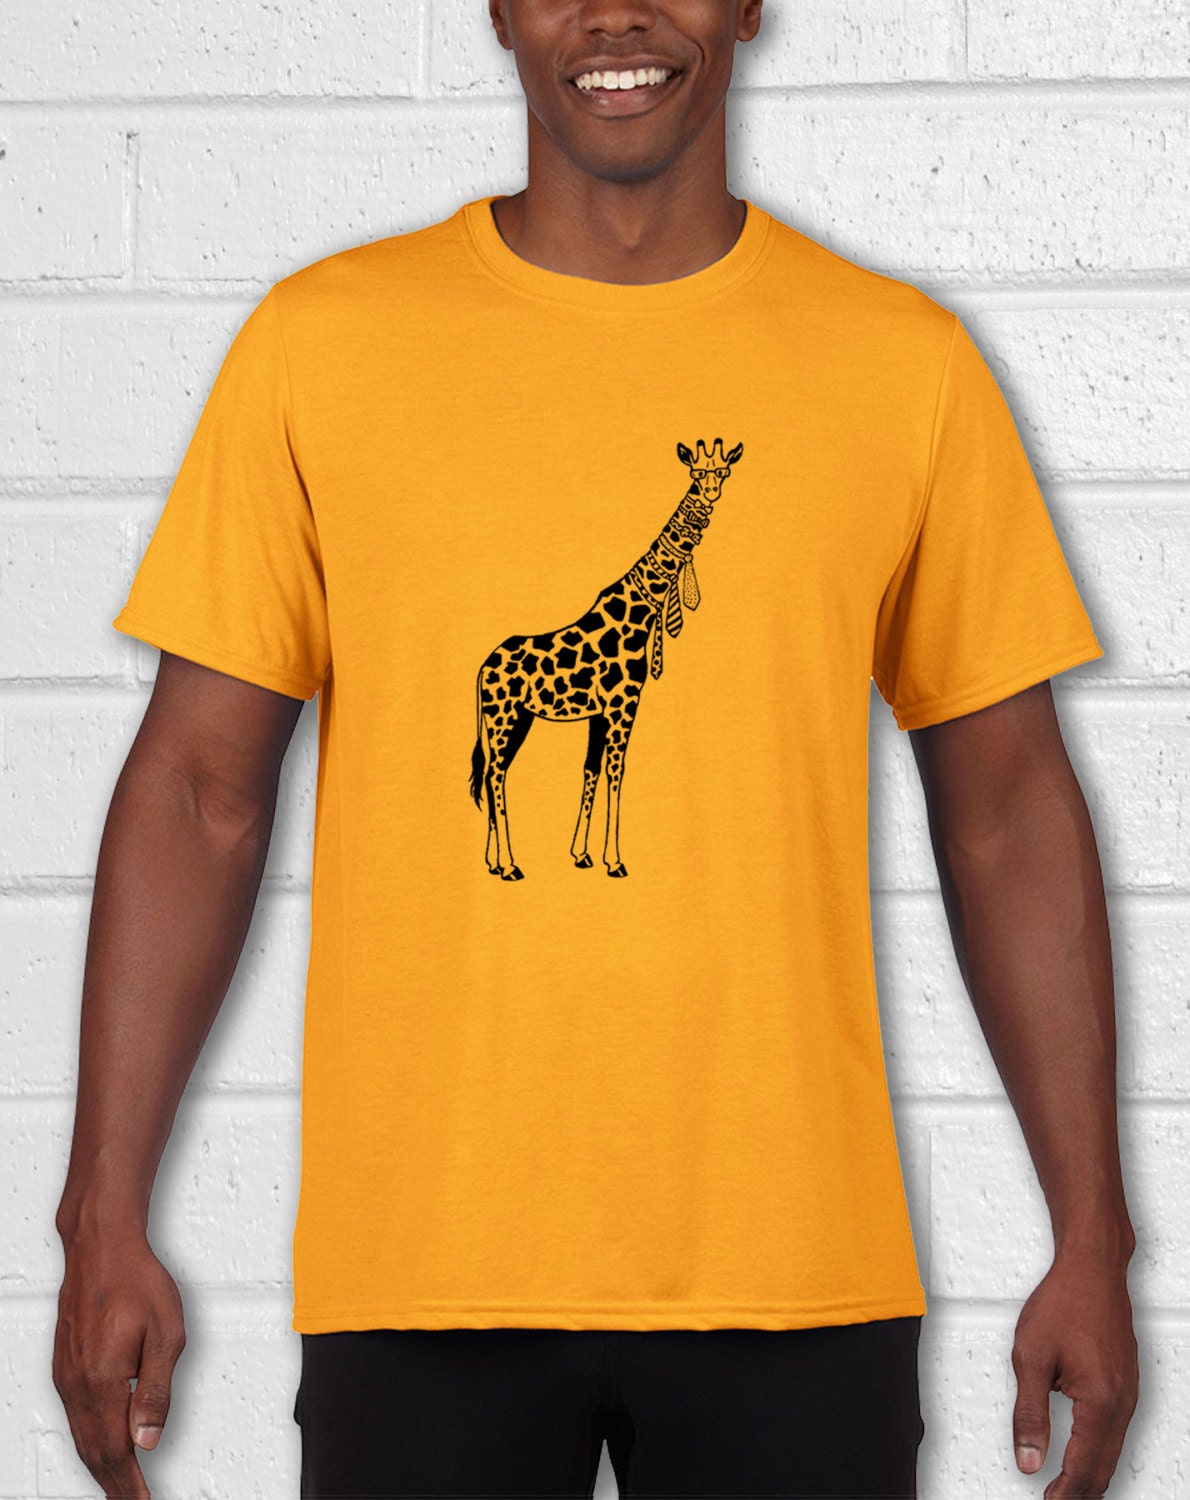 Giraffe shirt Mens Tshirt Mens Tees Giraffe t shirt Funny